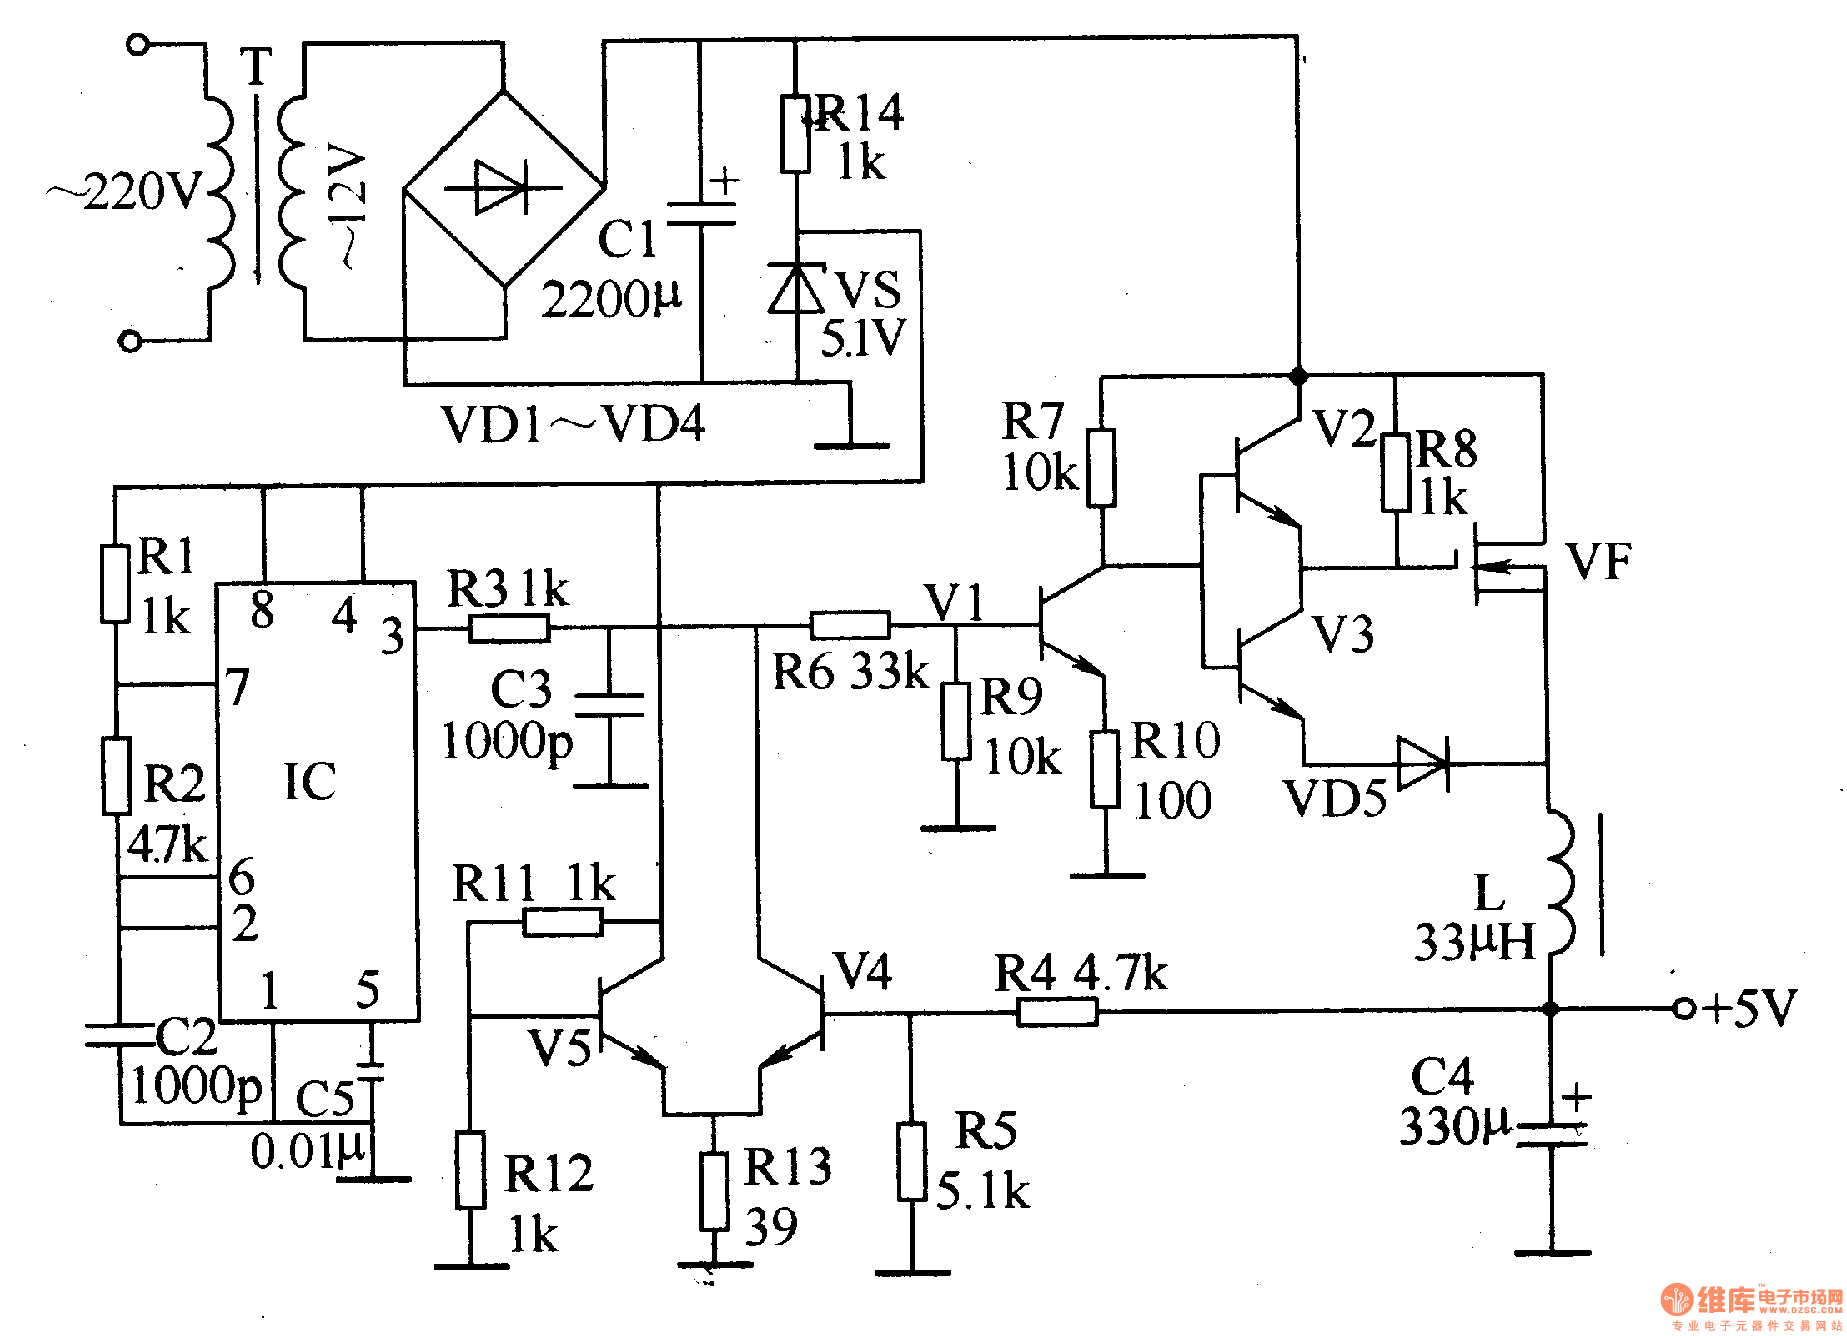 laptop diagram: 12v Regulated Power Supply Schematic Diagram